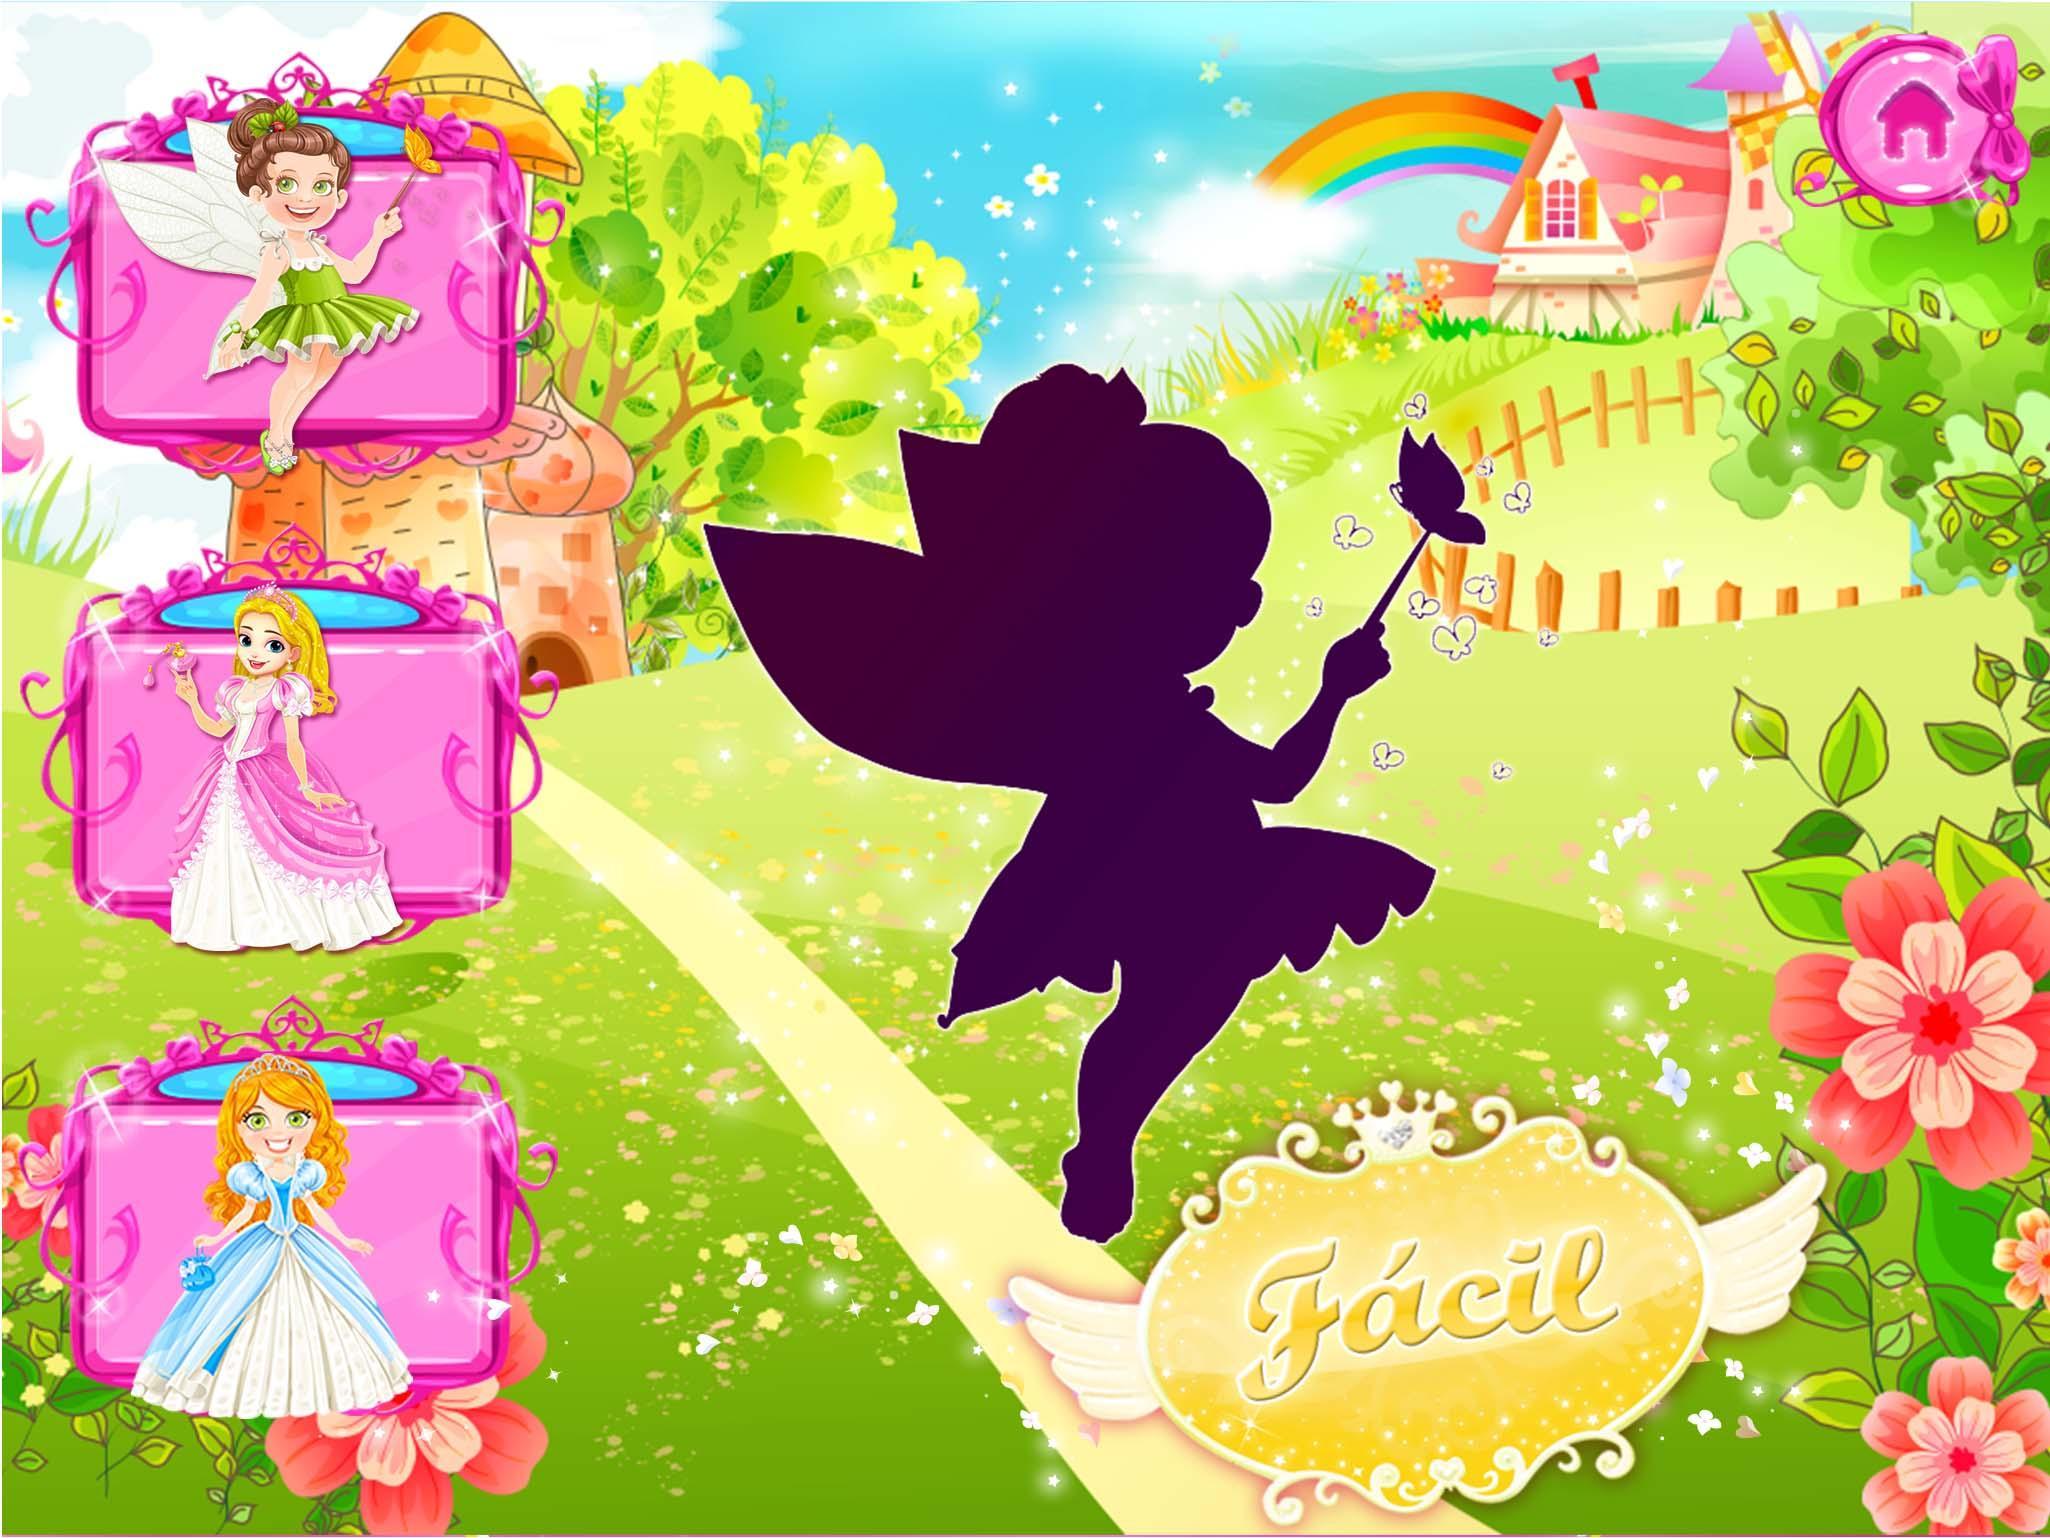 Rompecabezas de Princesa - Juegos gratis de niñas for Android - APK Download